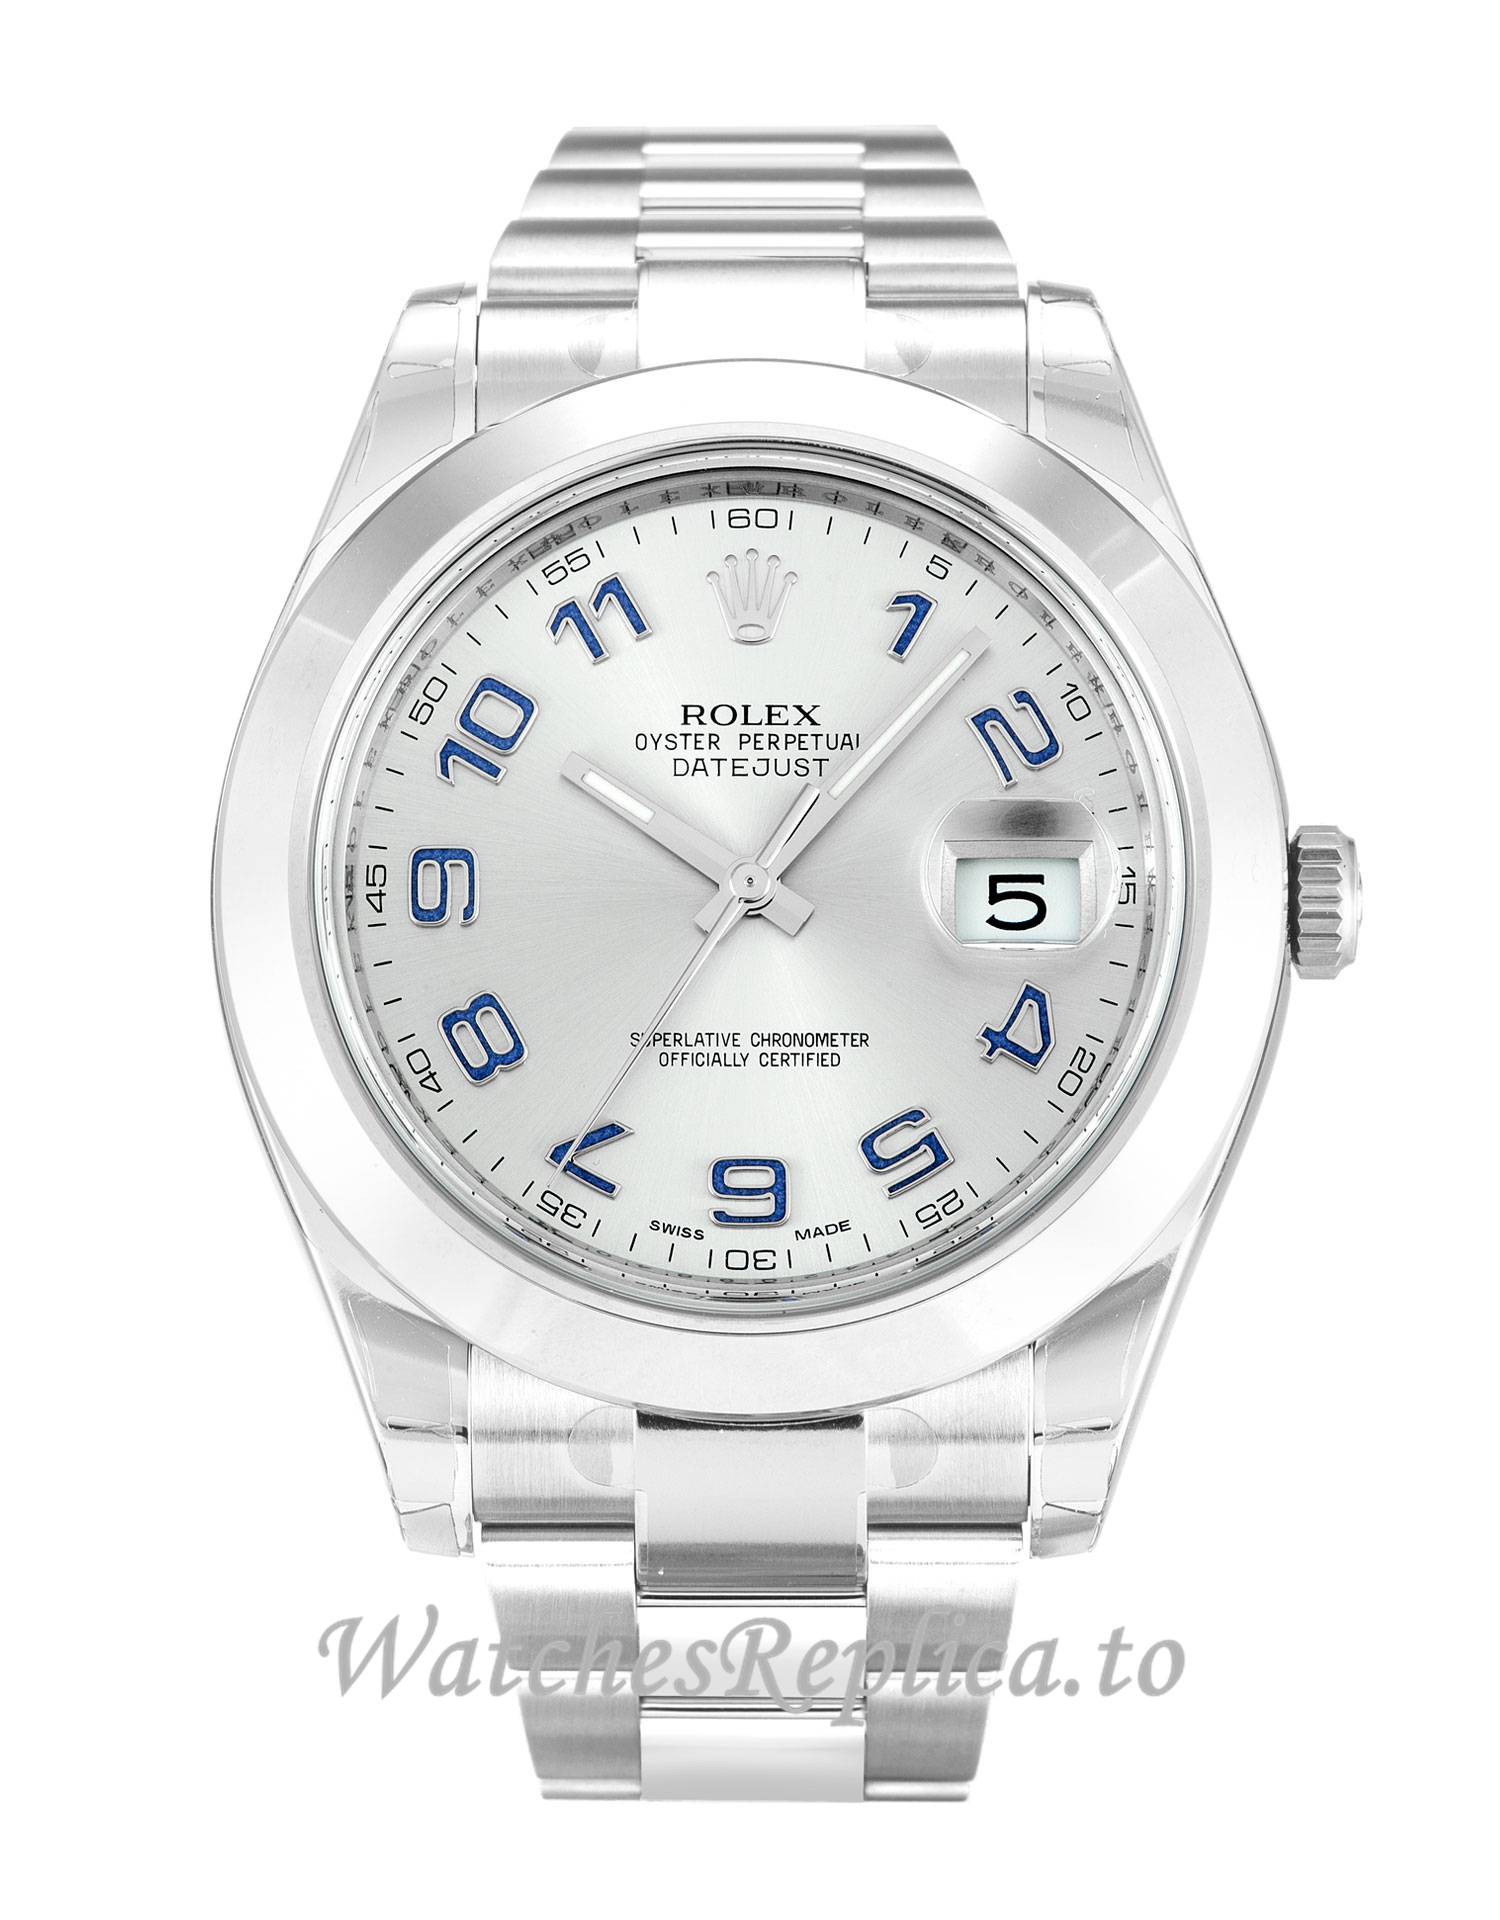 omega carrera watch